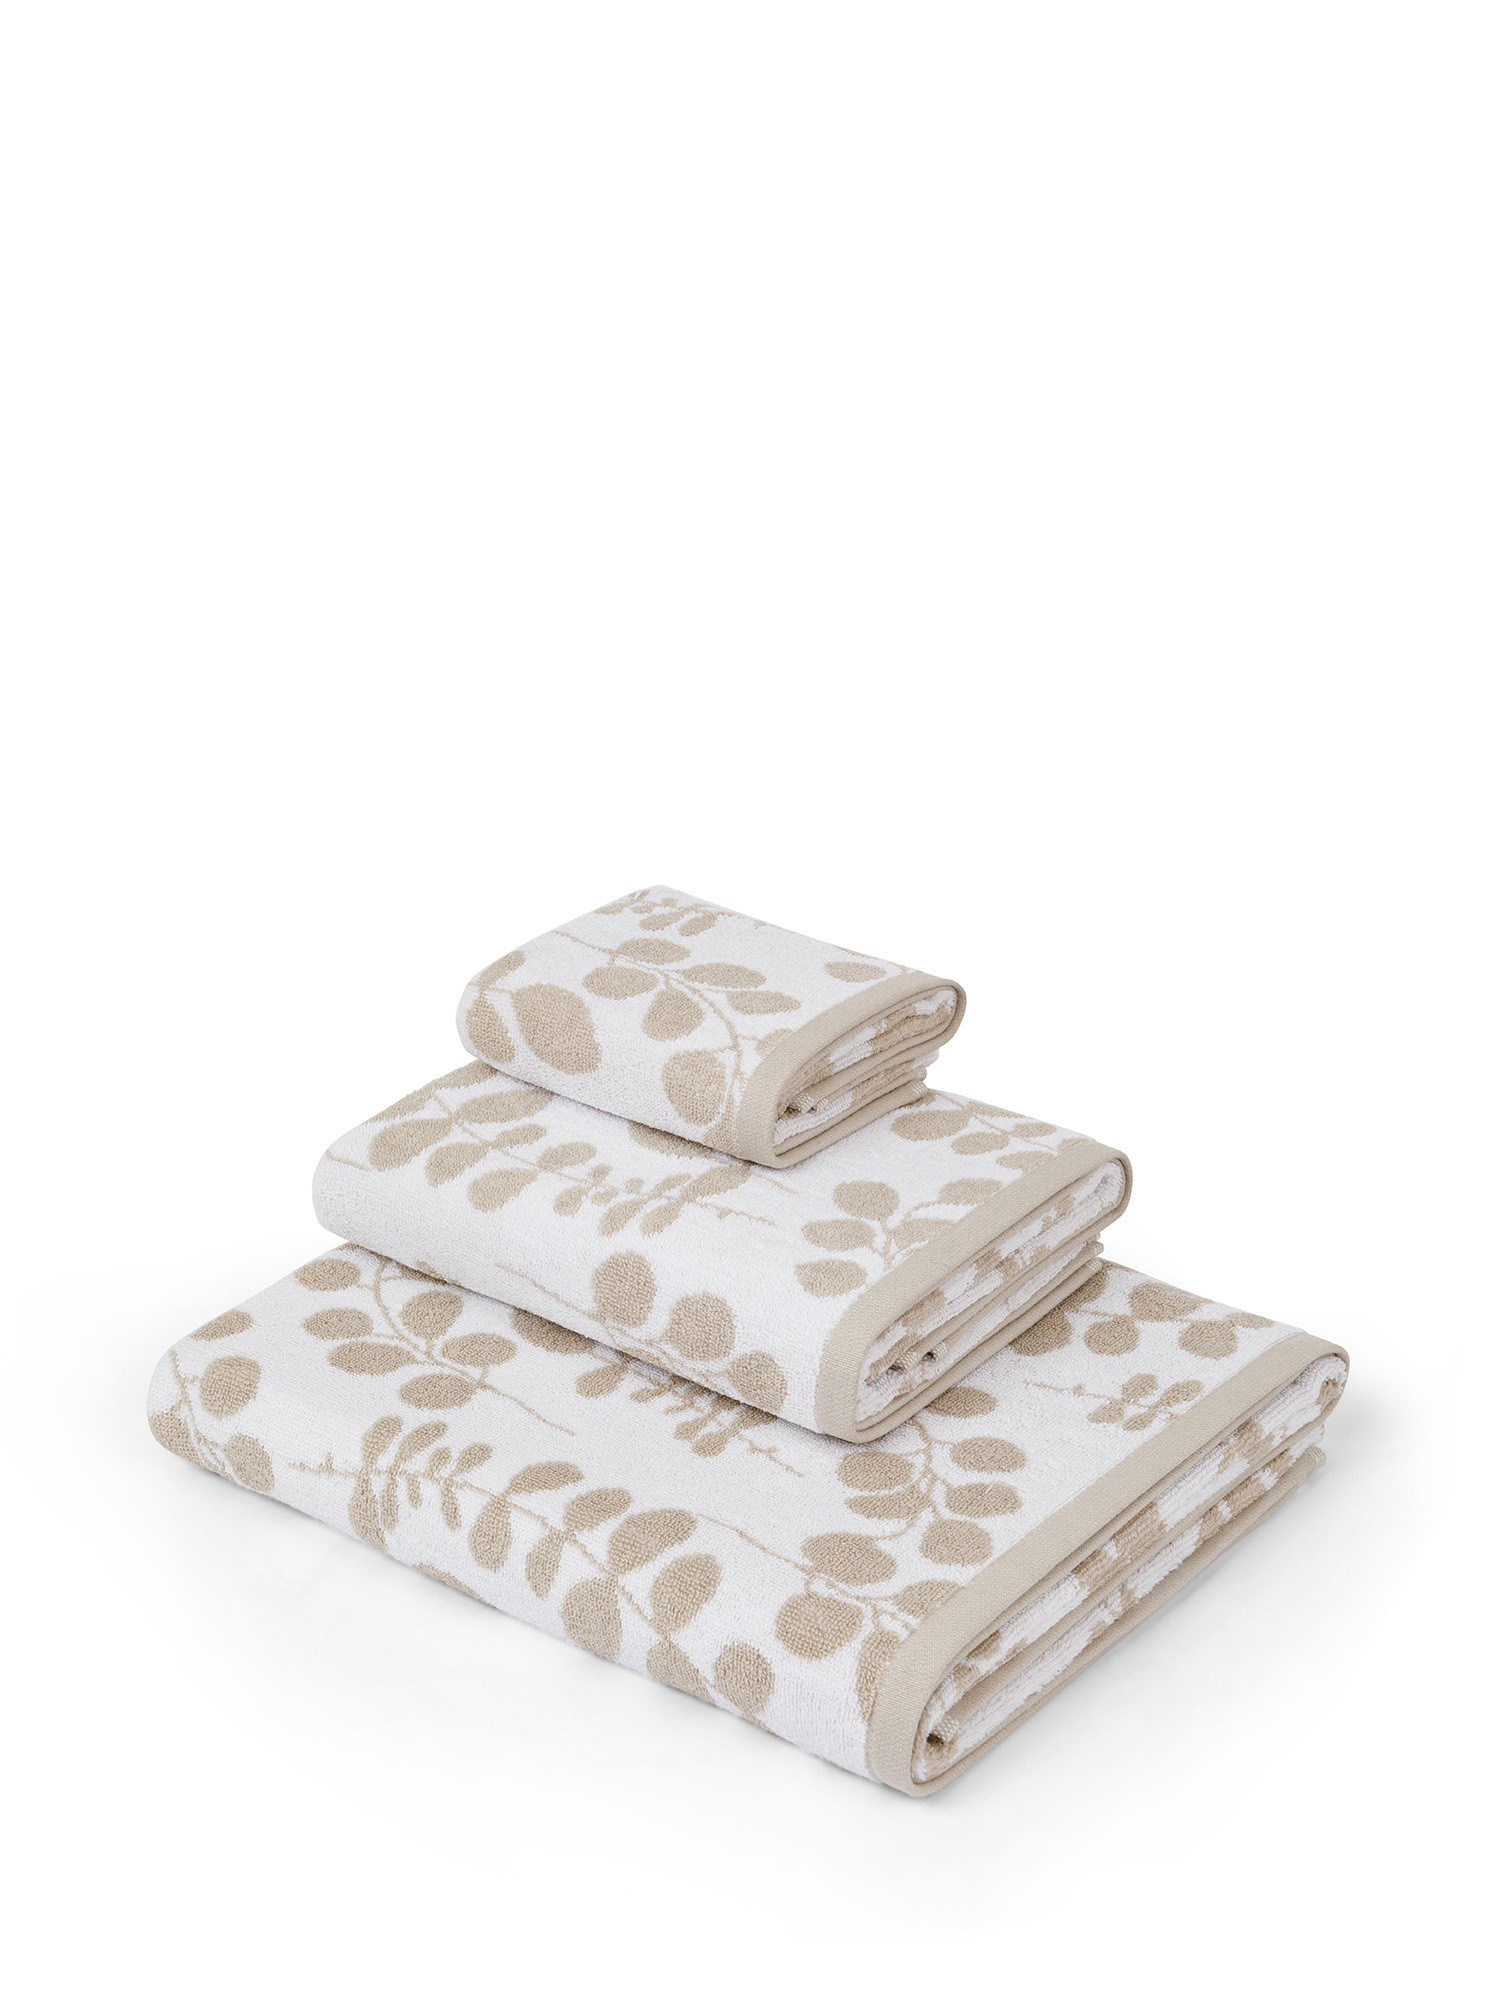 Foliage motif cotton terry towel, Beige, large image number 0